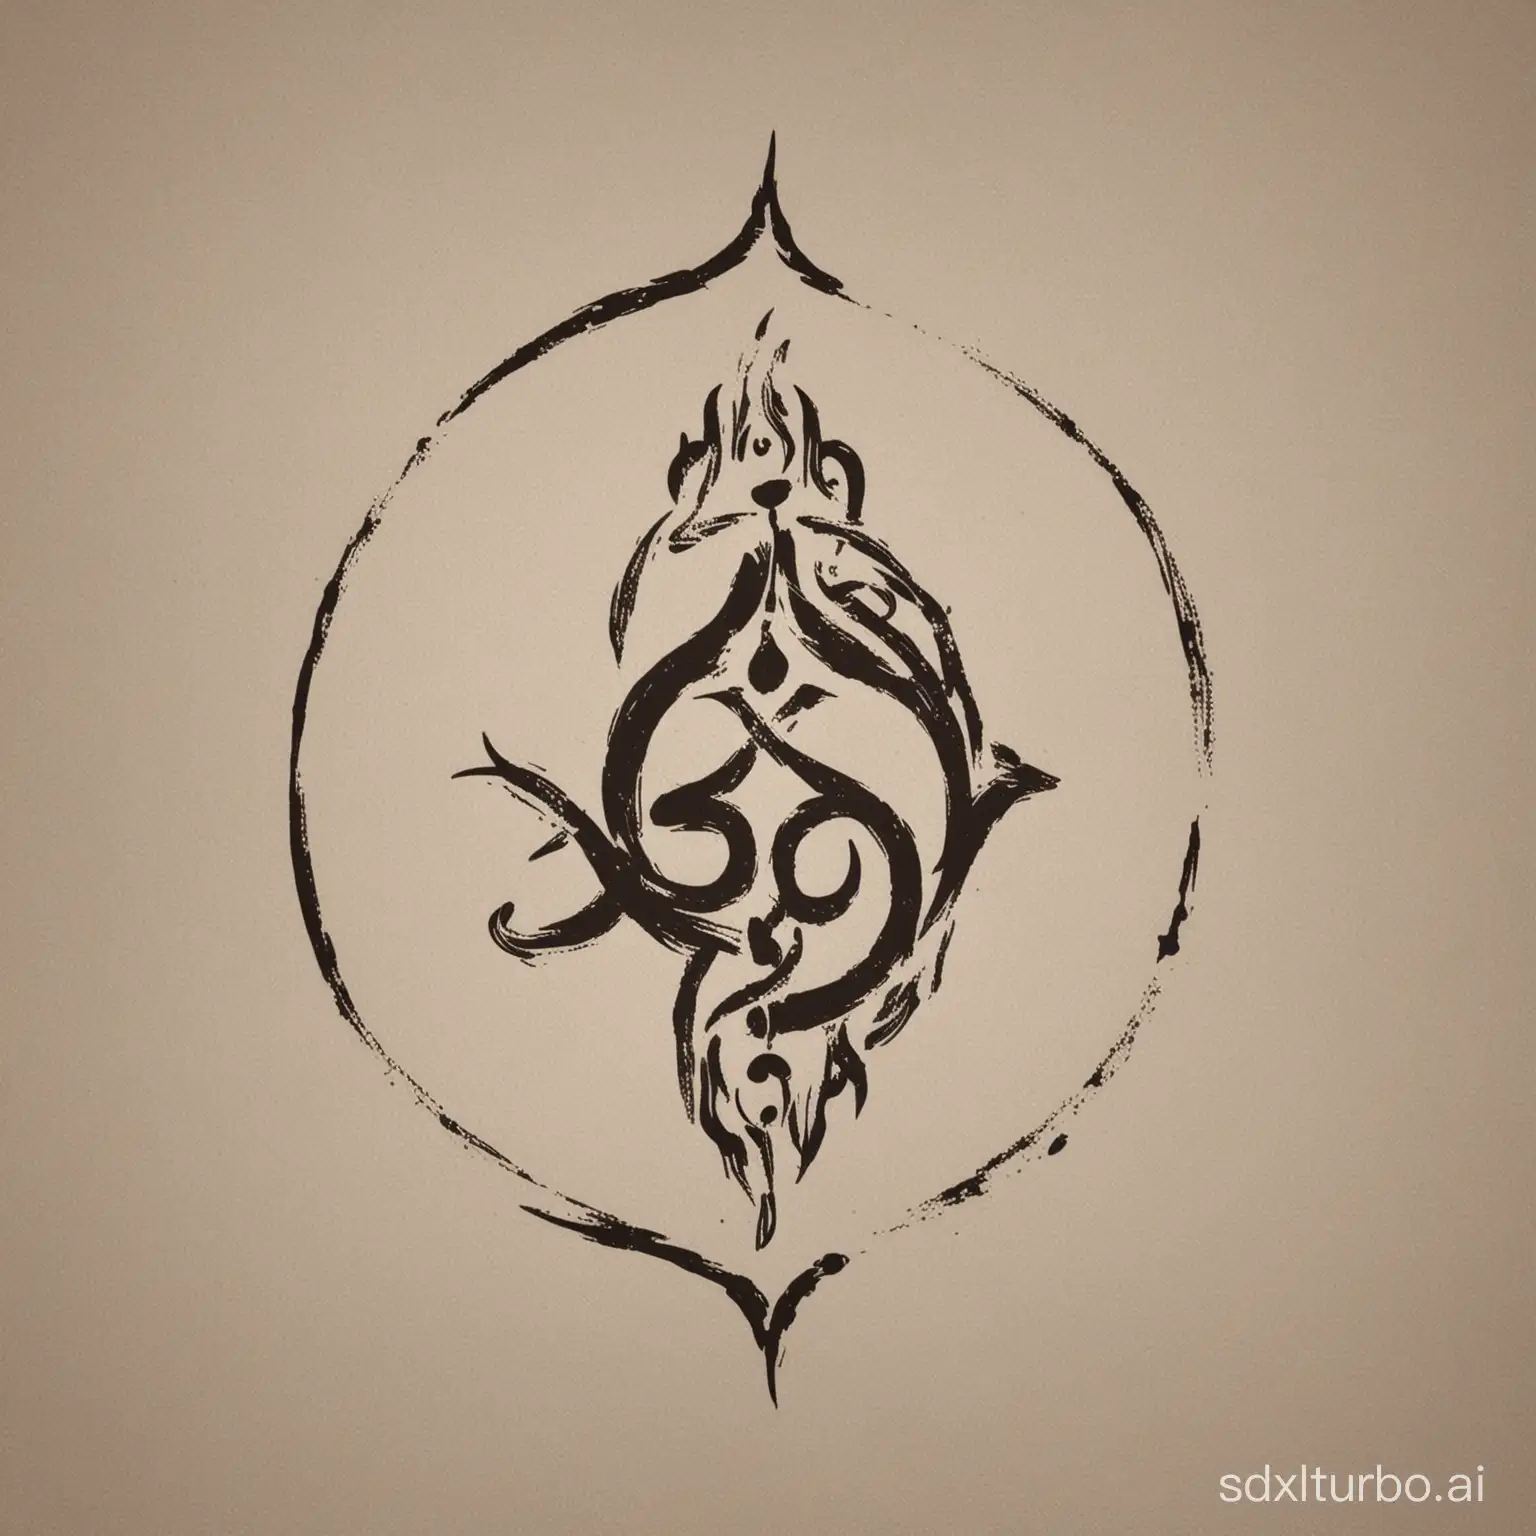 A minimalistic logo of shiva and shakti , principle of duality